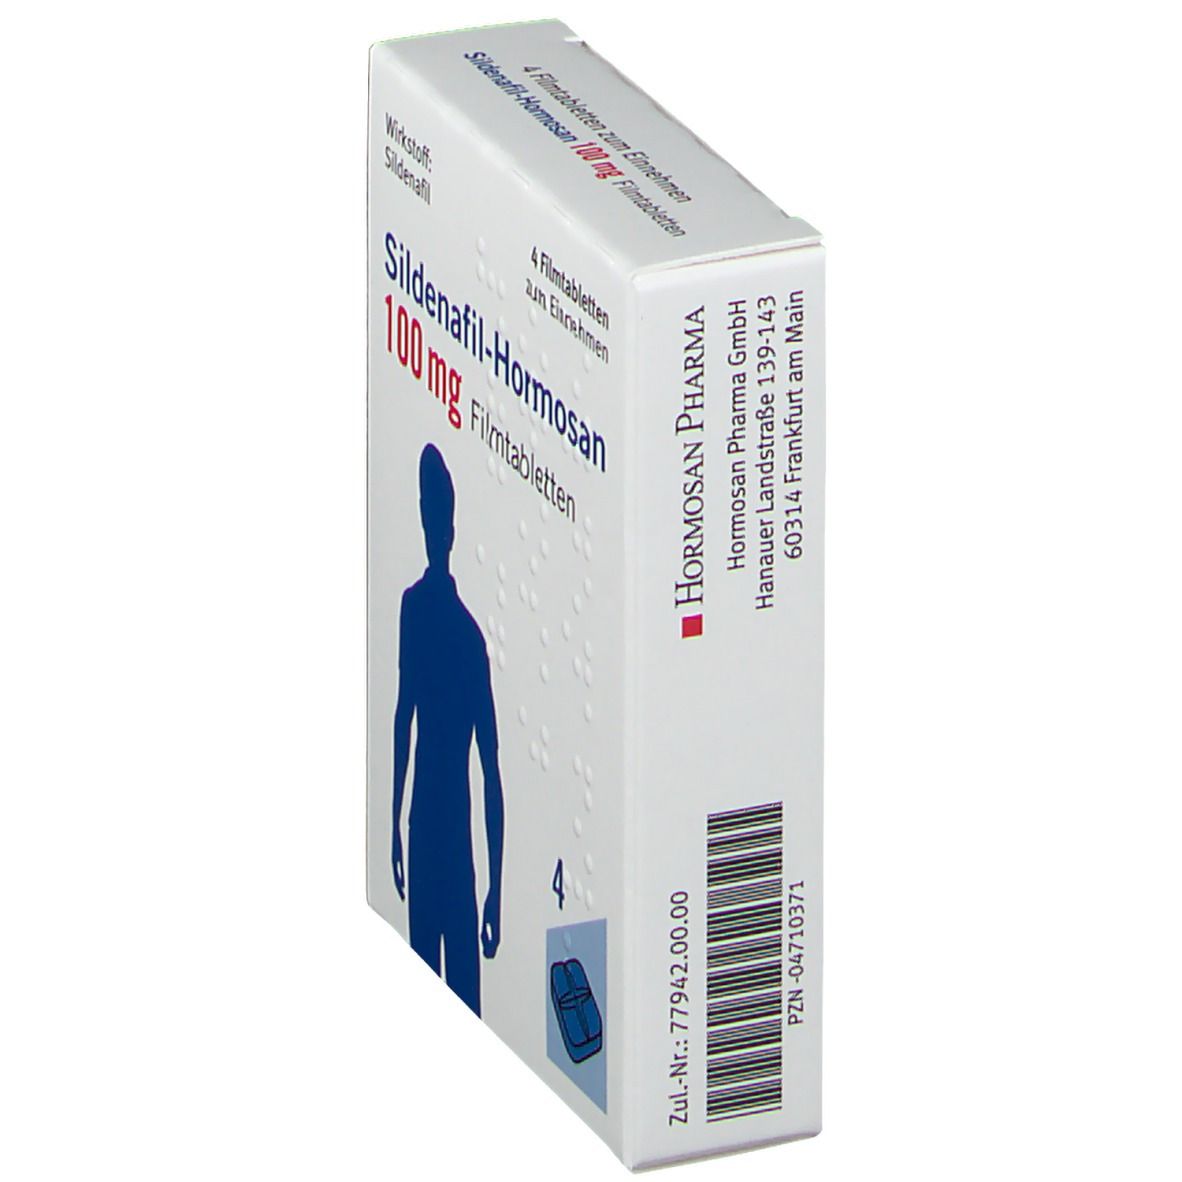 Sildenafil-Hormosan 100 mg